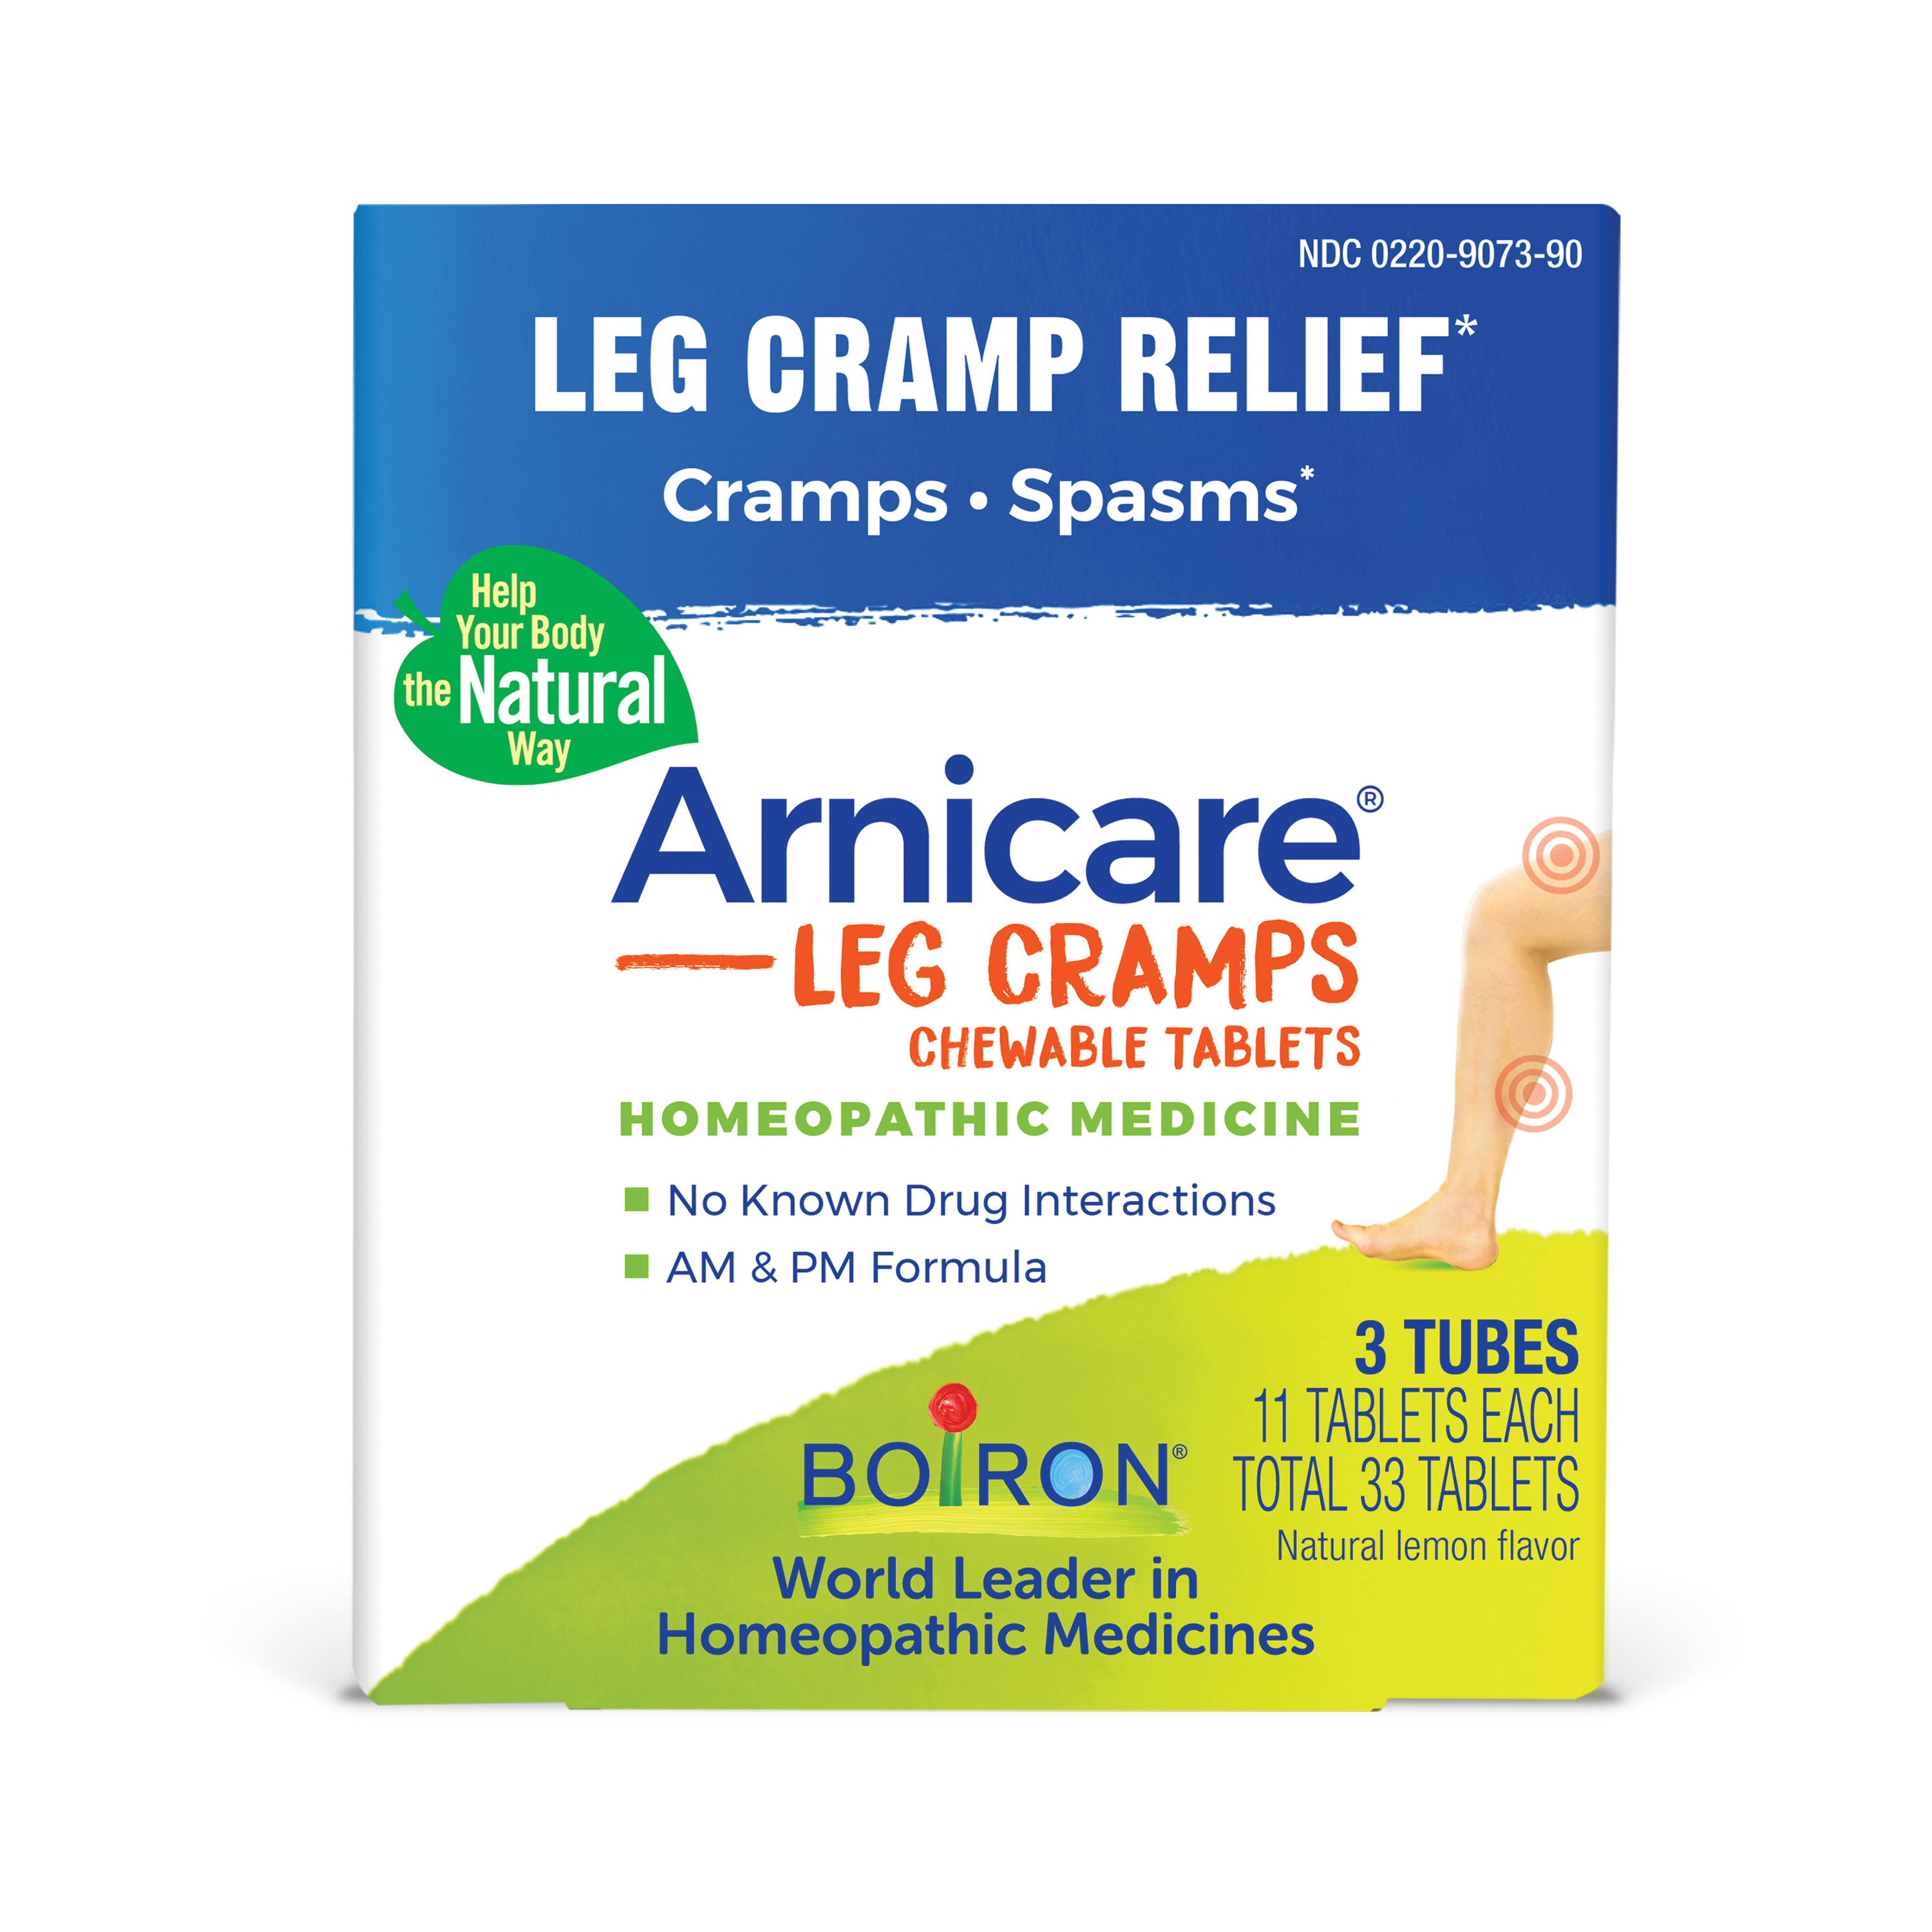 Image for Arnicare Leg Cramps